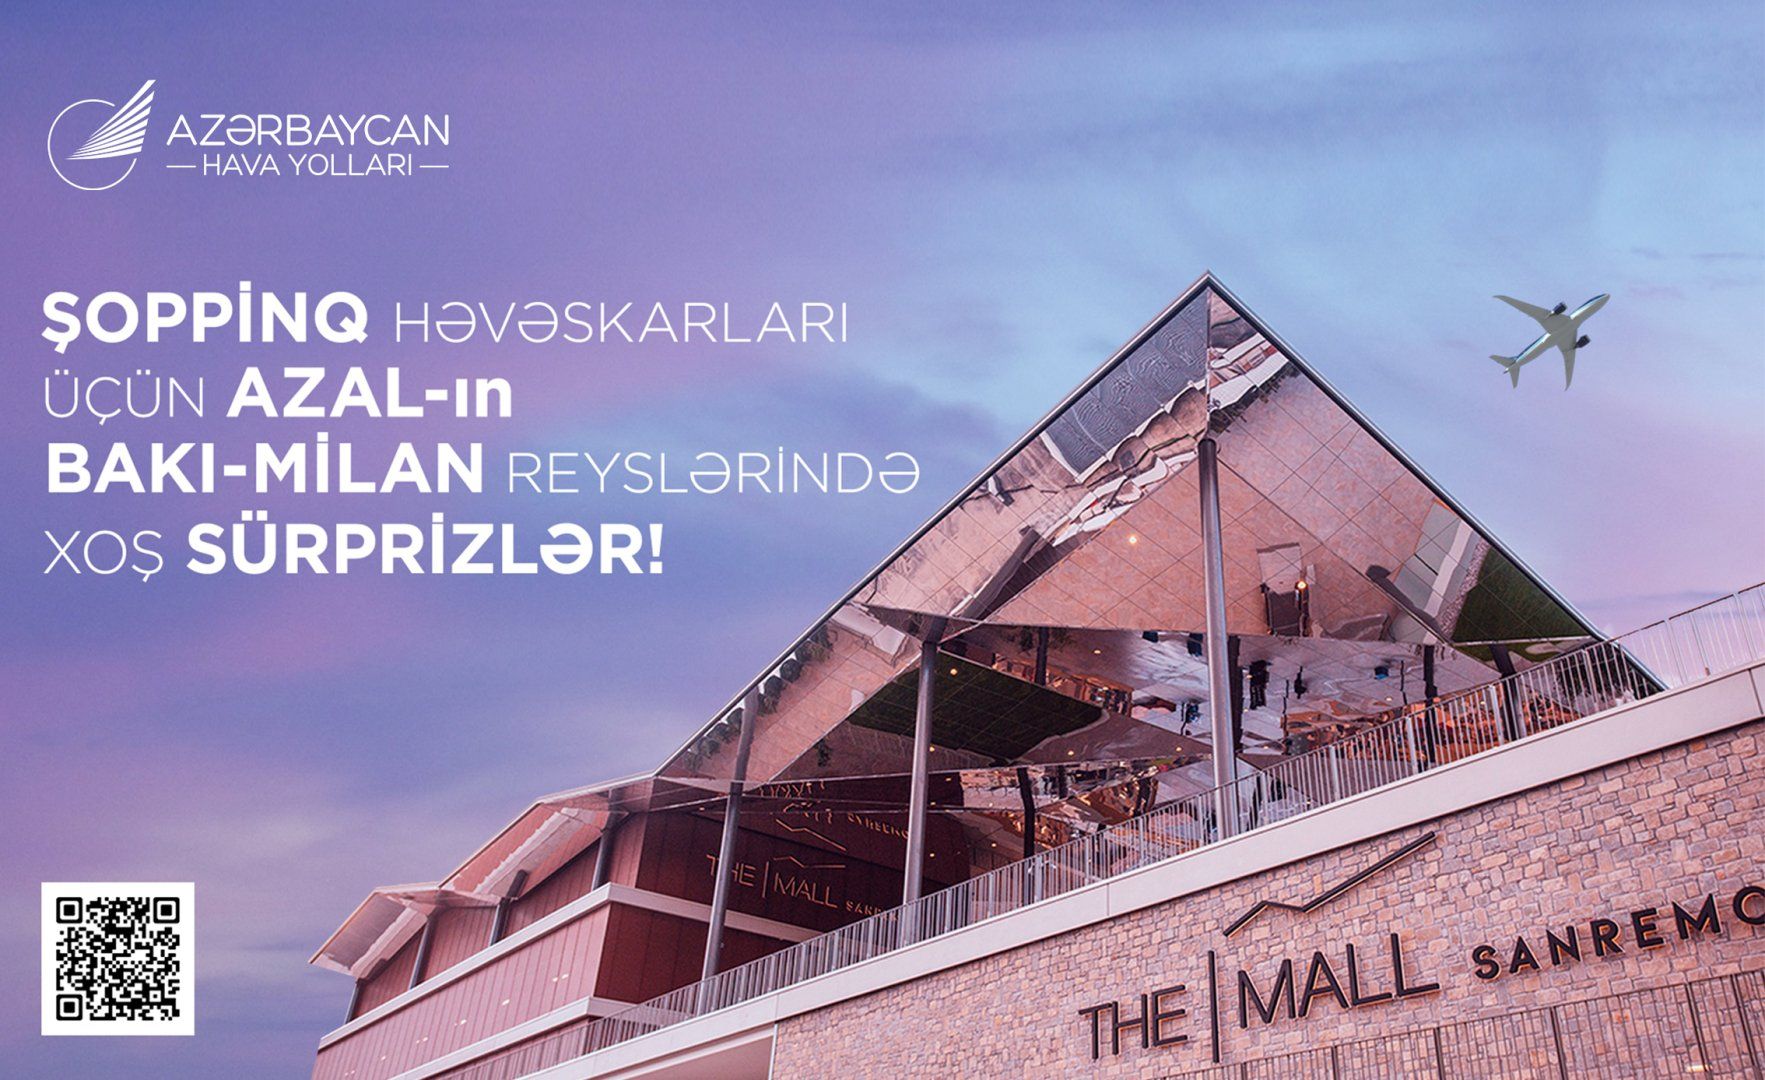 Special opportunities from AZAL for passengers of Baku-Milan flight